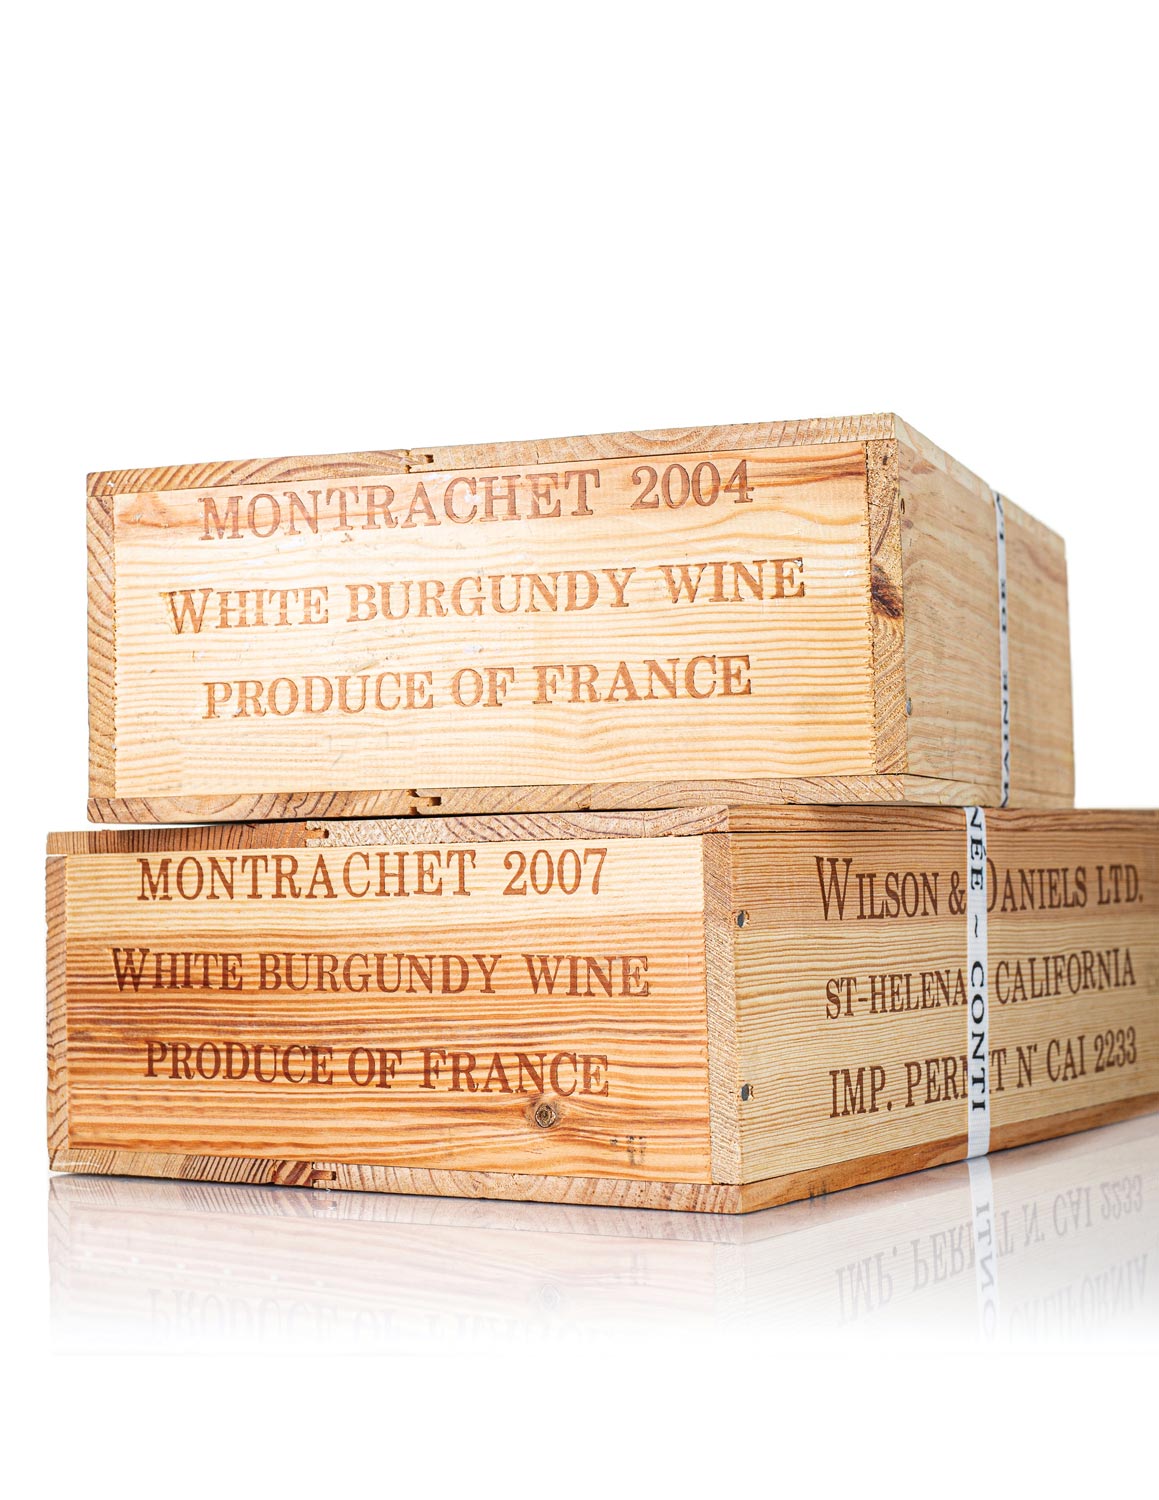 Lot 263, 264: 3 bottles each 2004, 2007 DRC Montrachet in banded OWCs